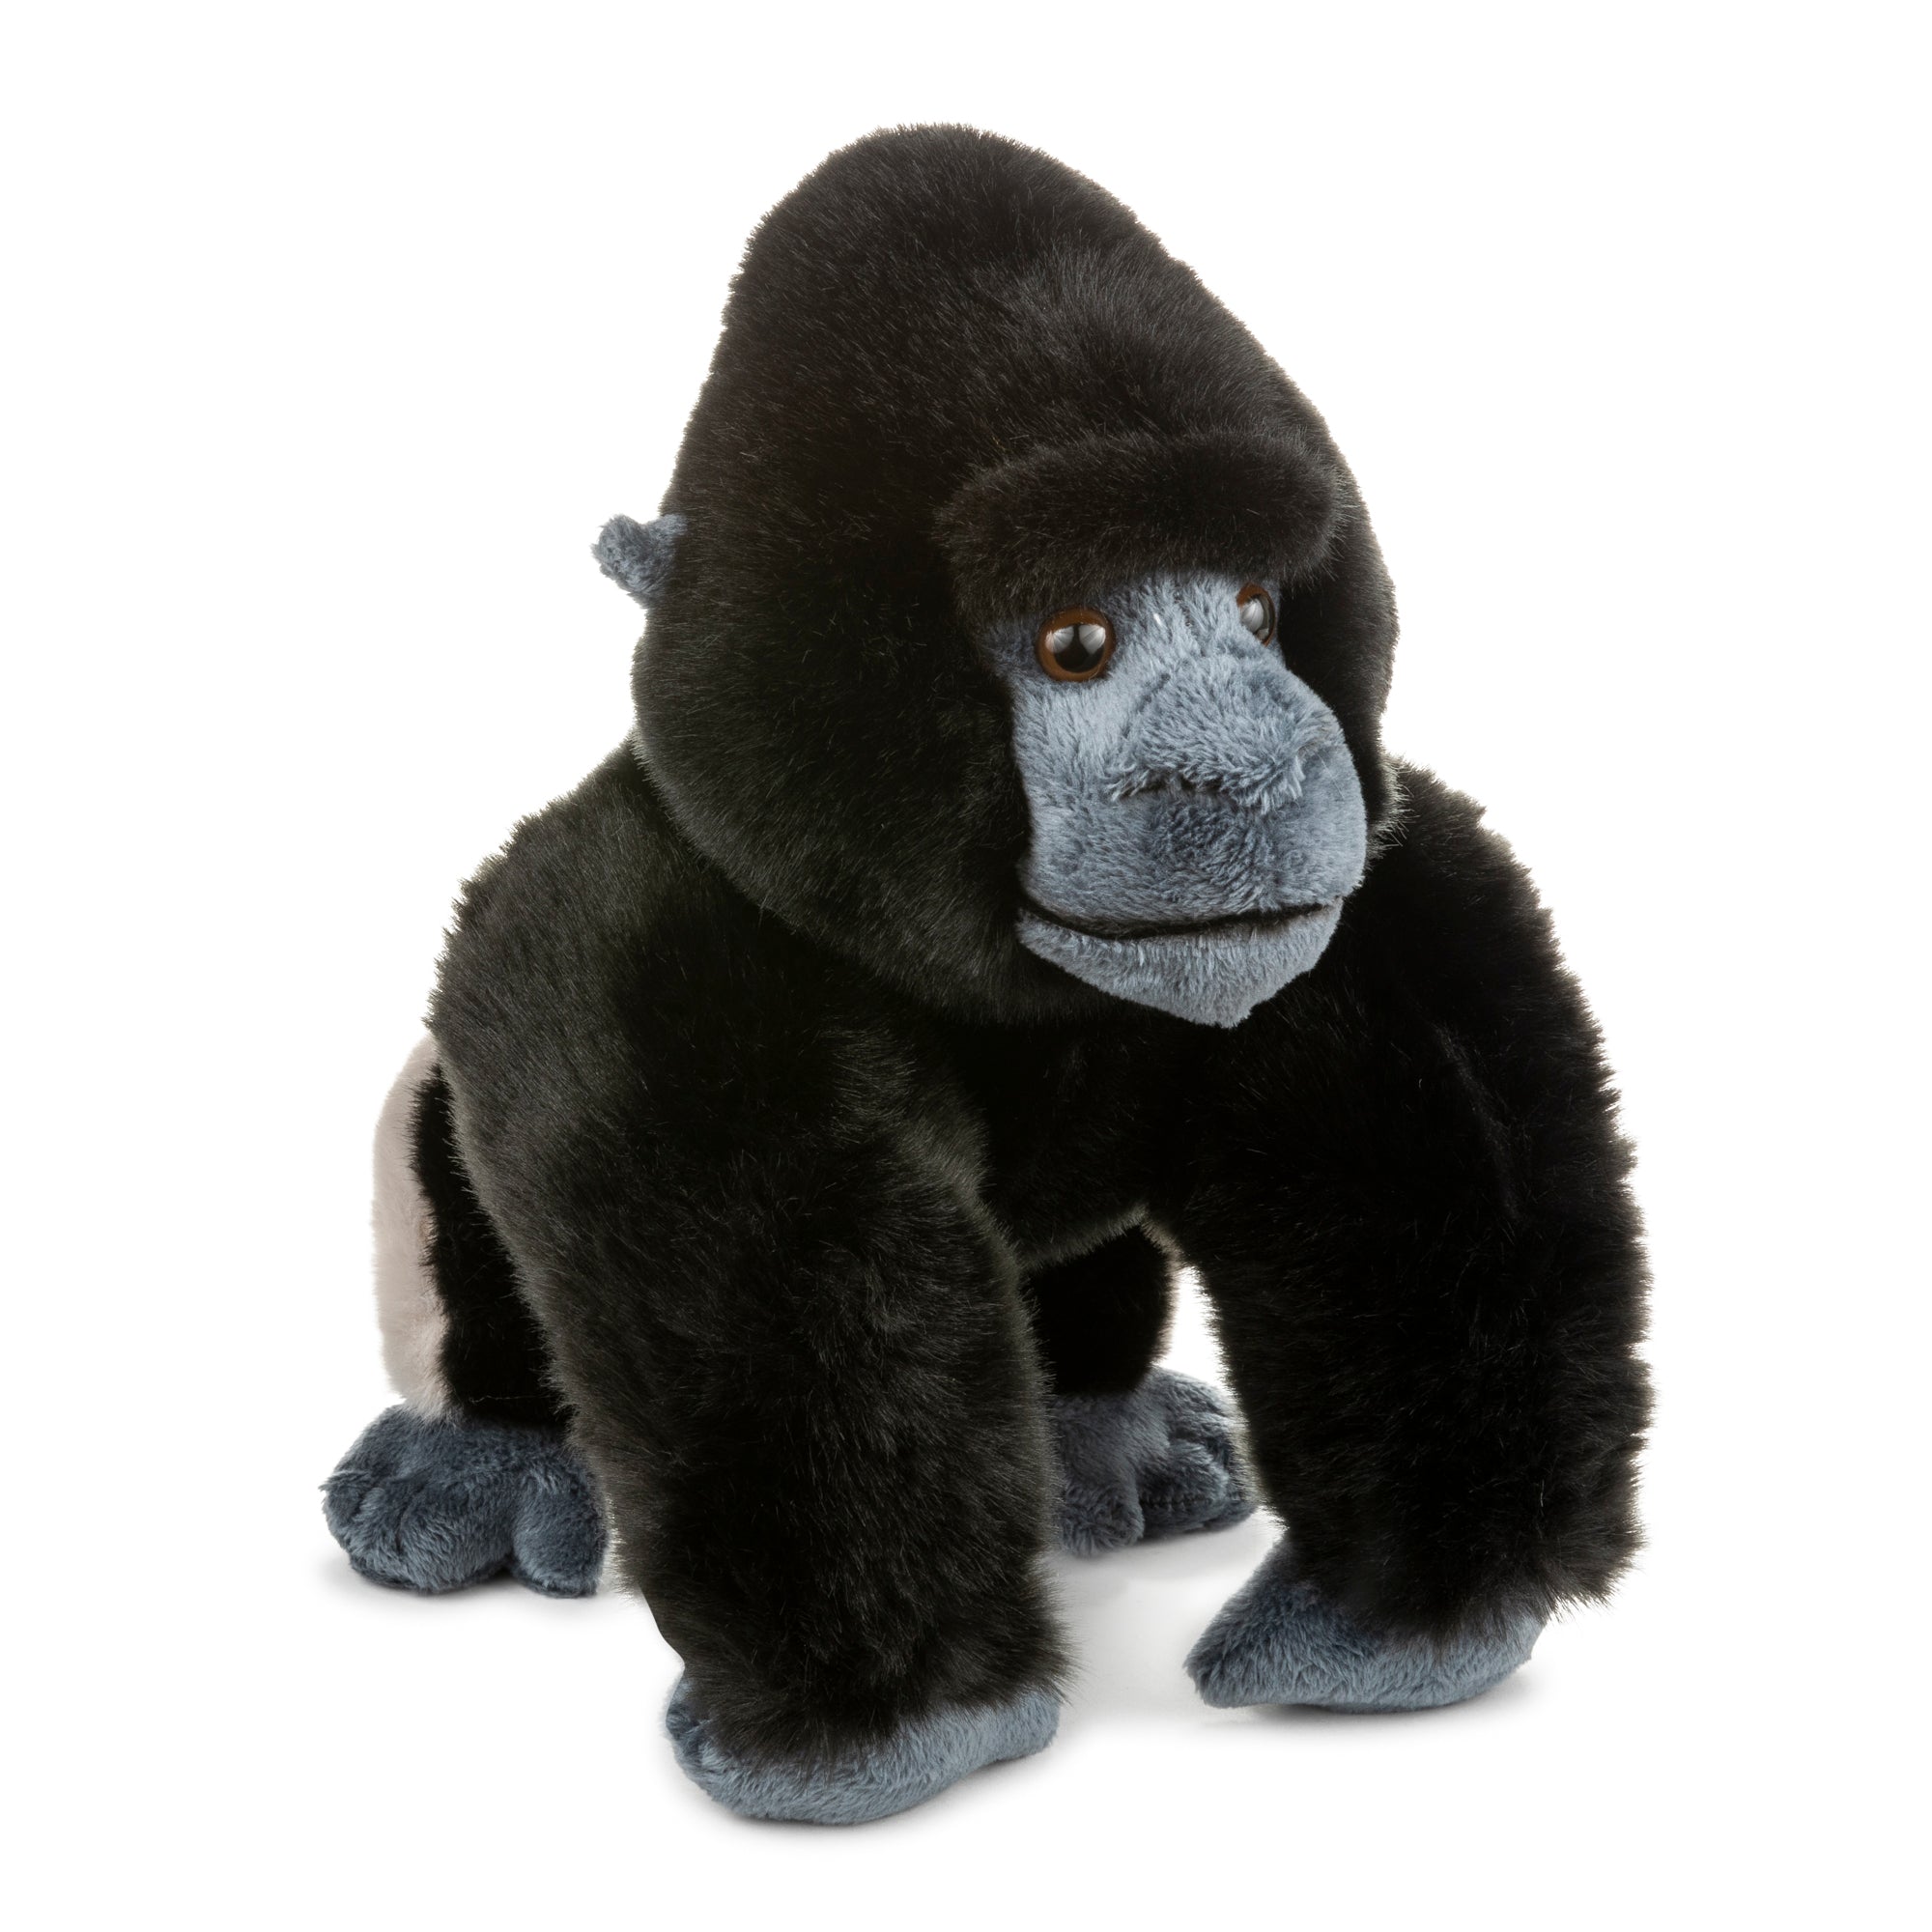 12 Standing Gorilla Stuffed Animal